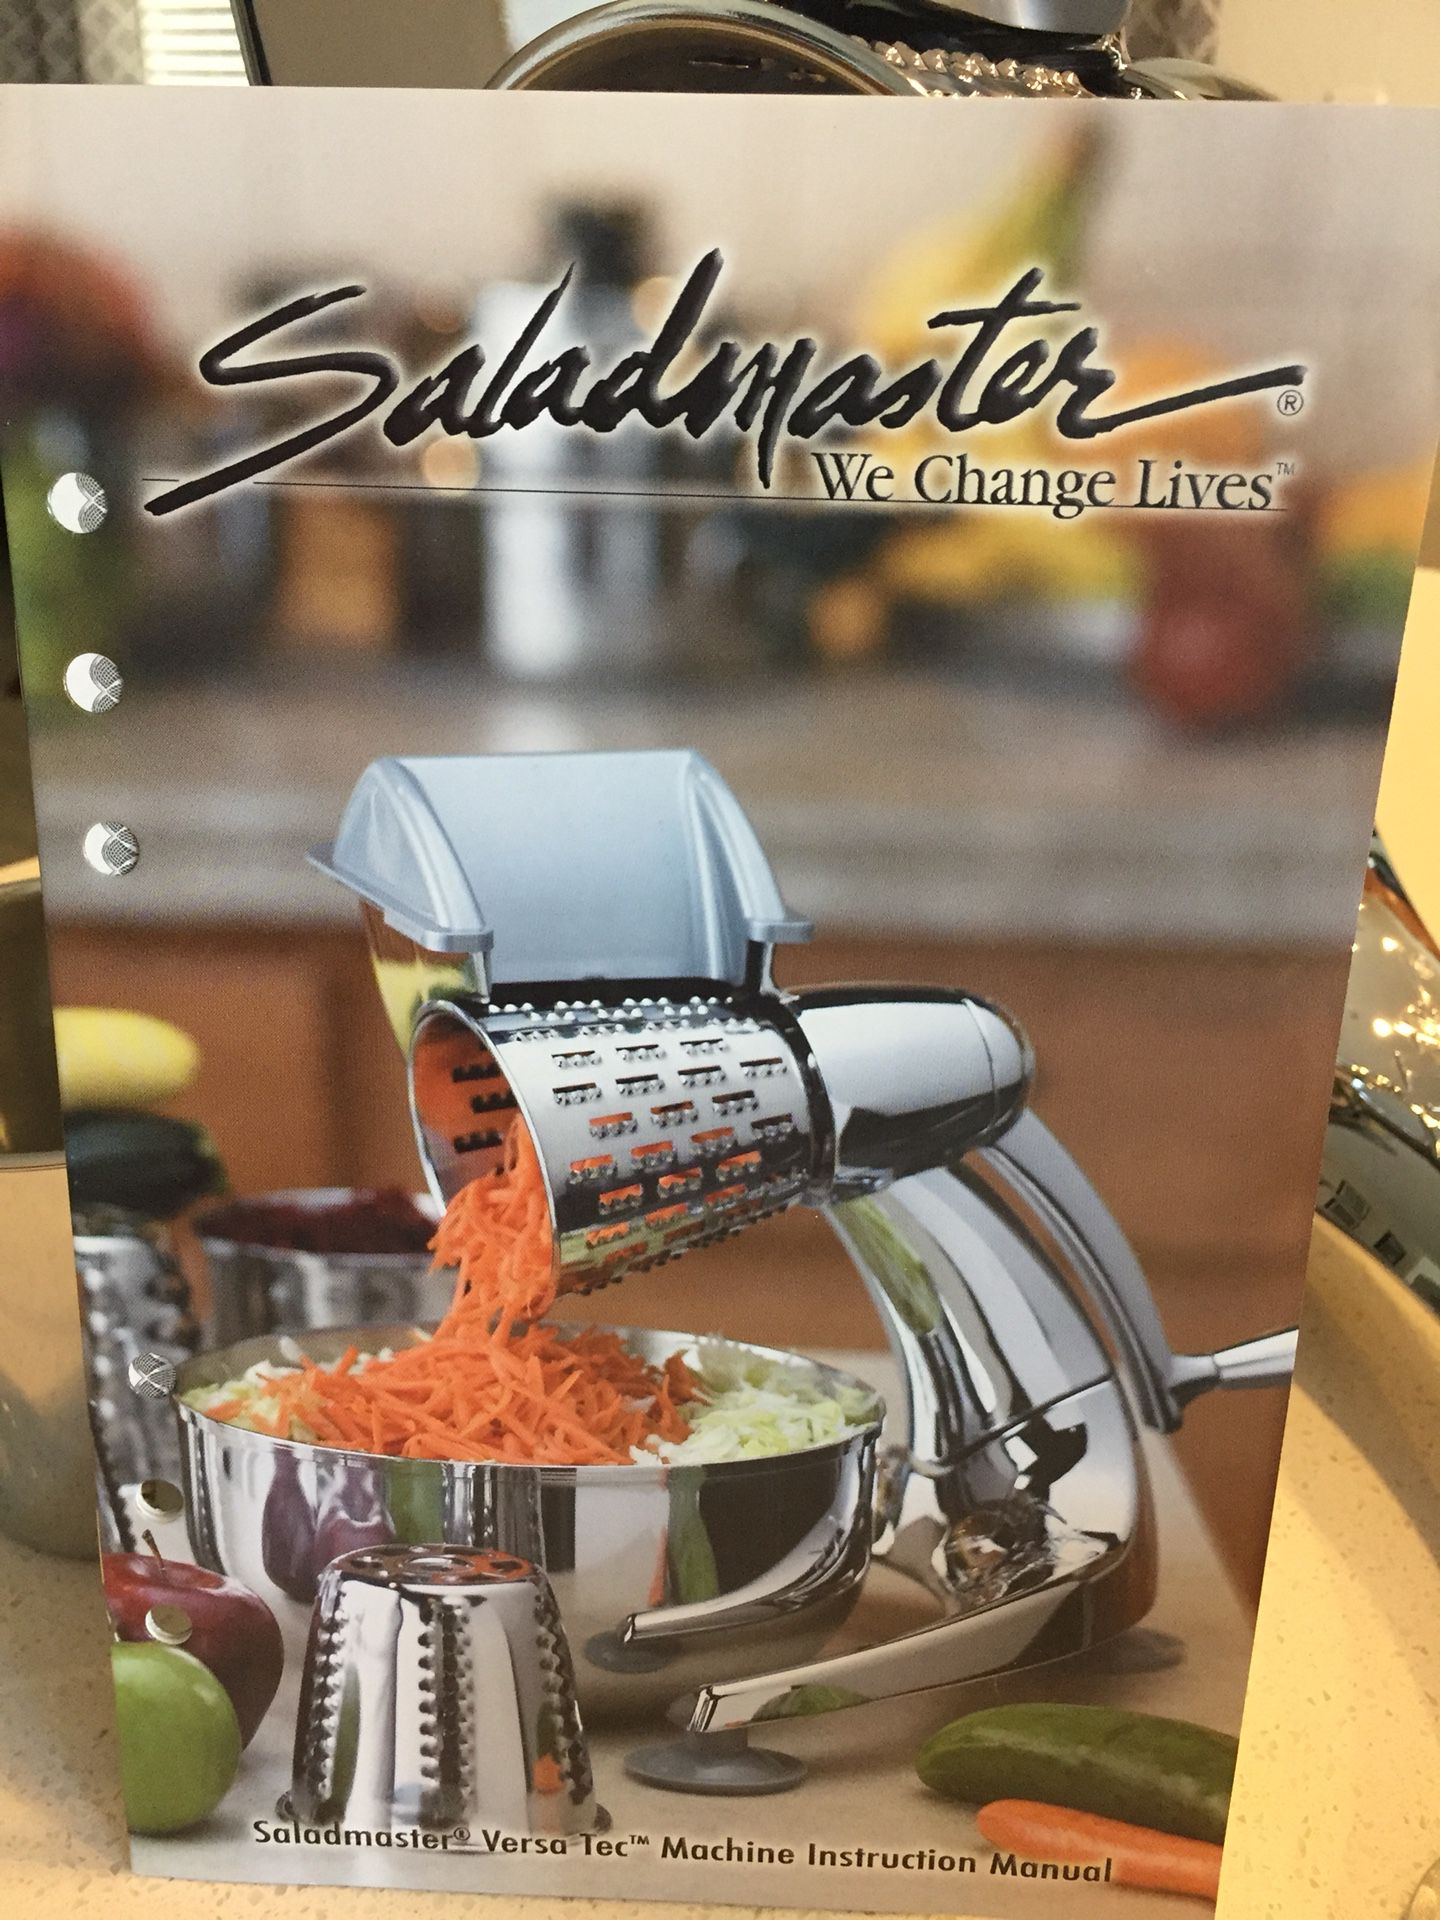 Saladmaster Versa tec Machine (Food Processor) for Sale in Las Vegas, NV -  OfferUp